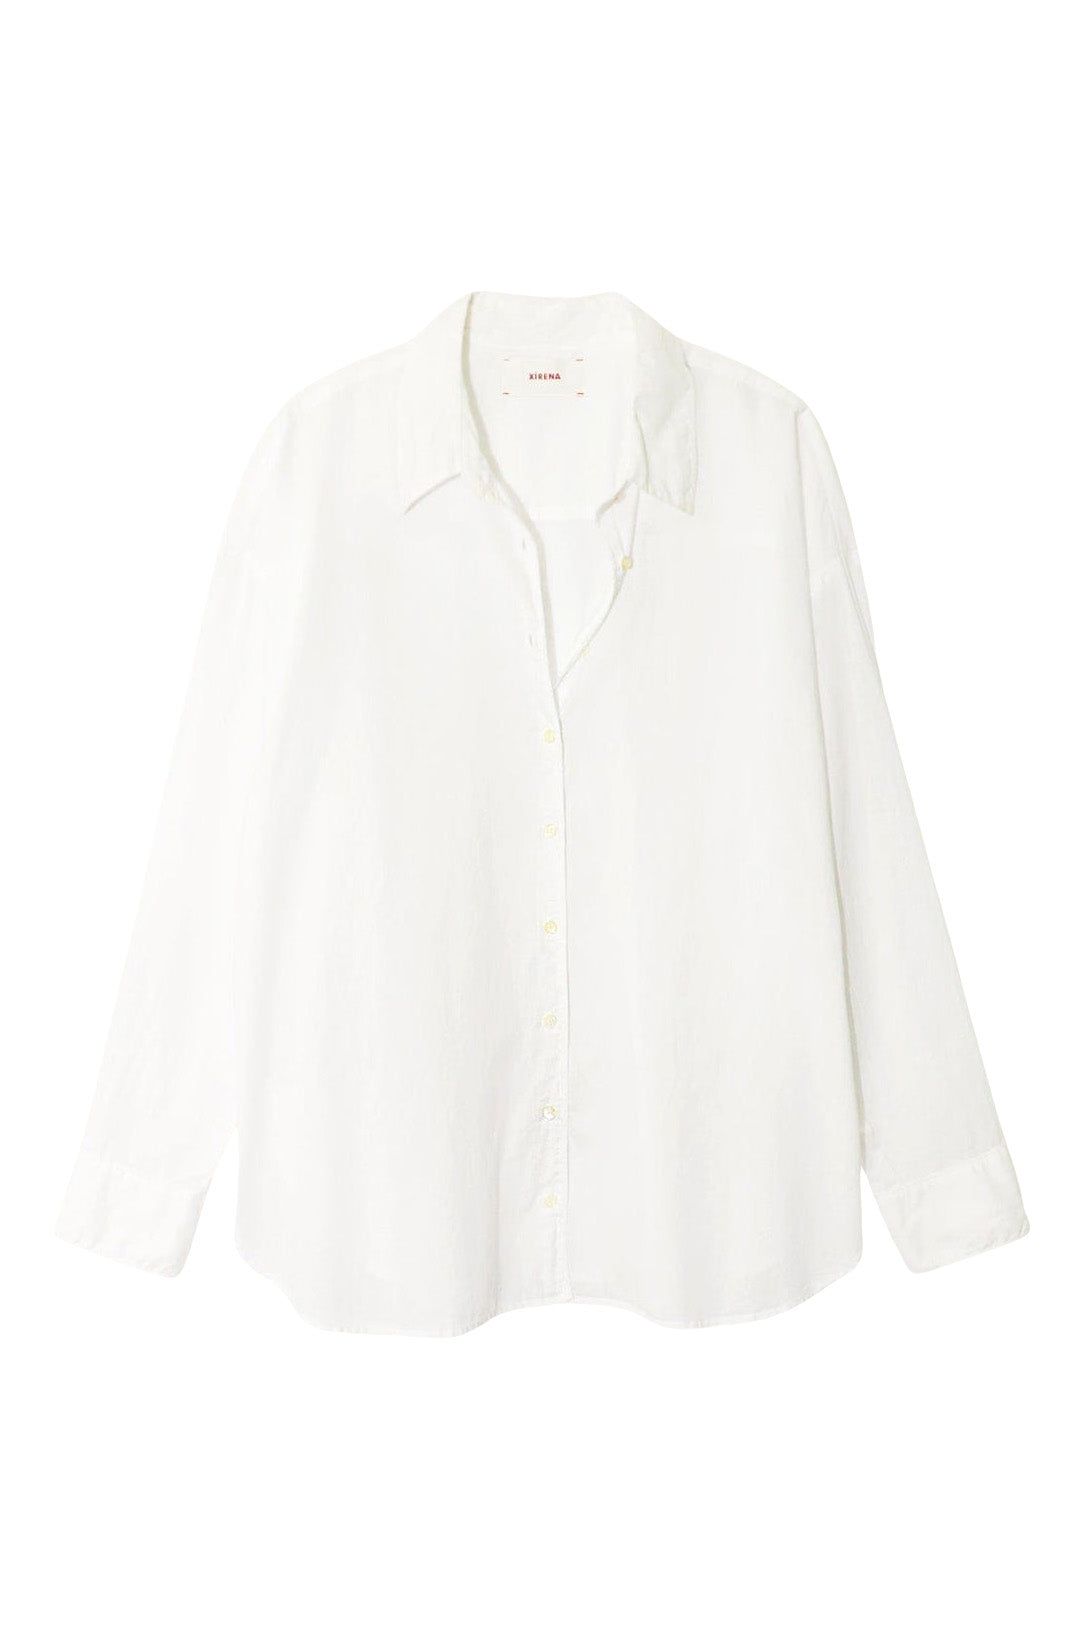 Xirena Berkley Shirt in White